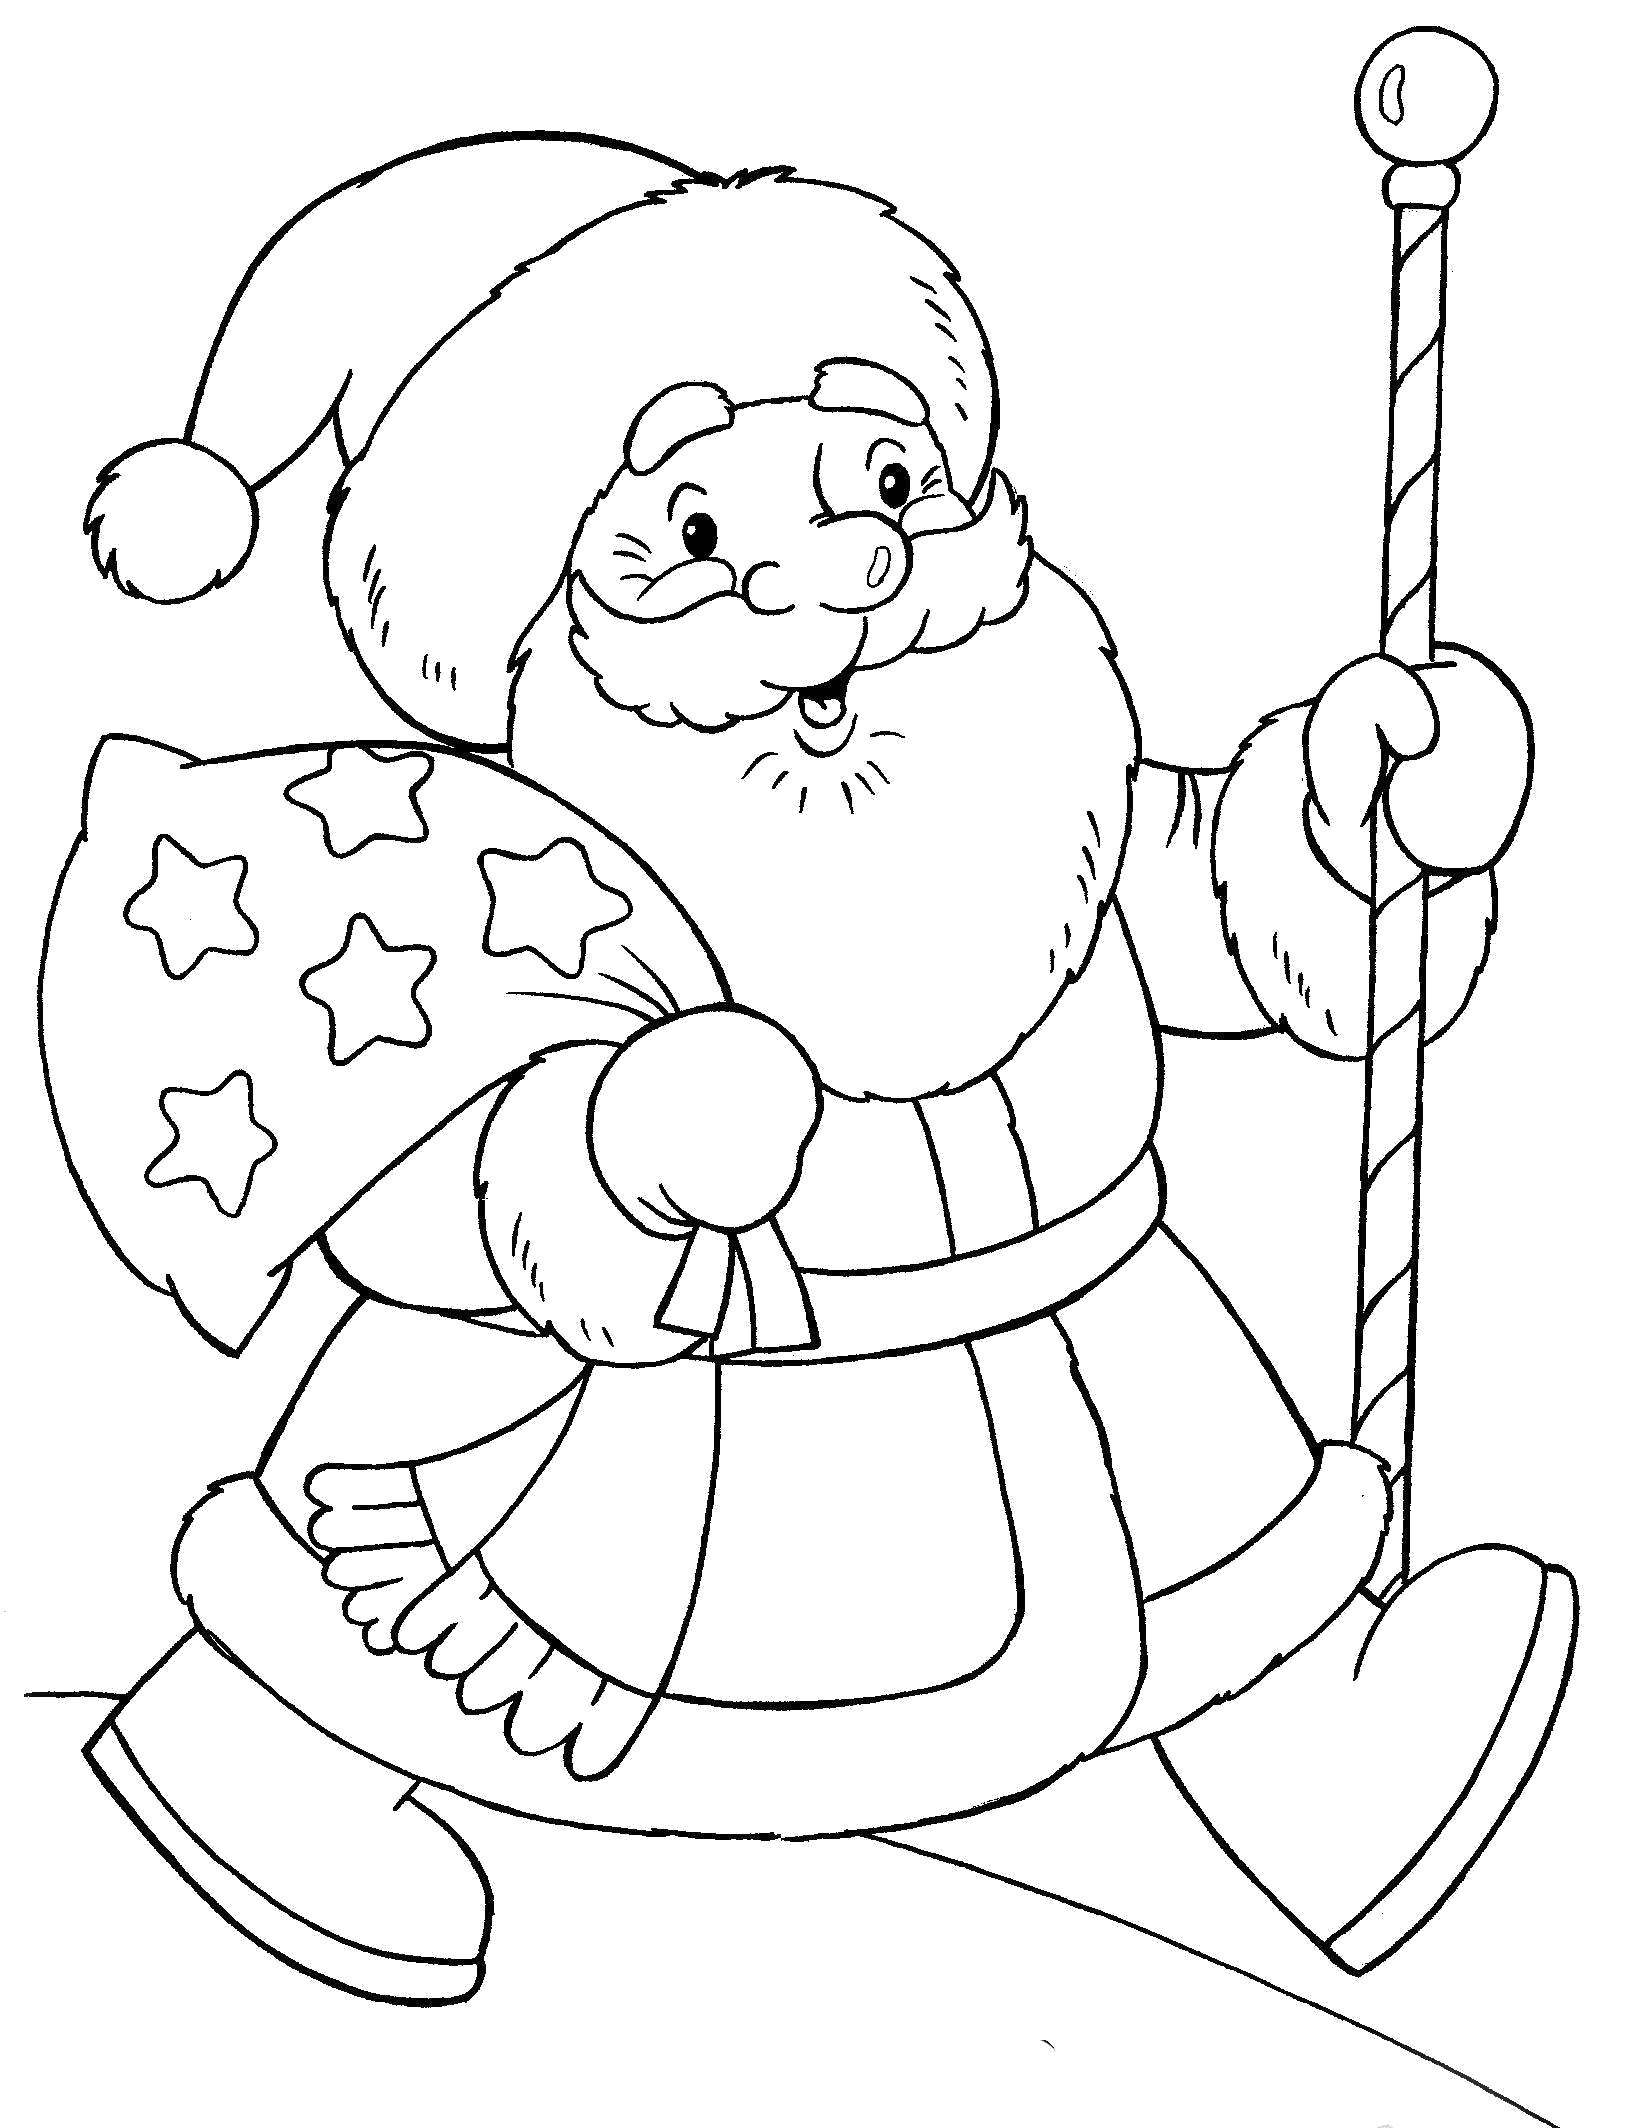 Название: Раскраска Дед МОроз бежит с мешком подарков. Категория: Дед мороз. Теги: дед мороз с подарками.